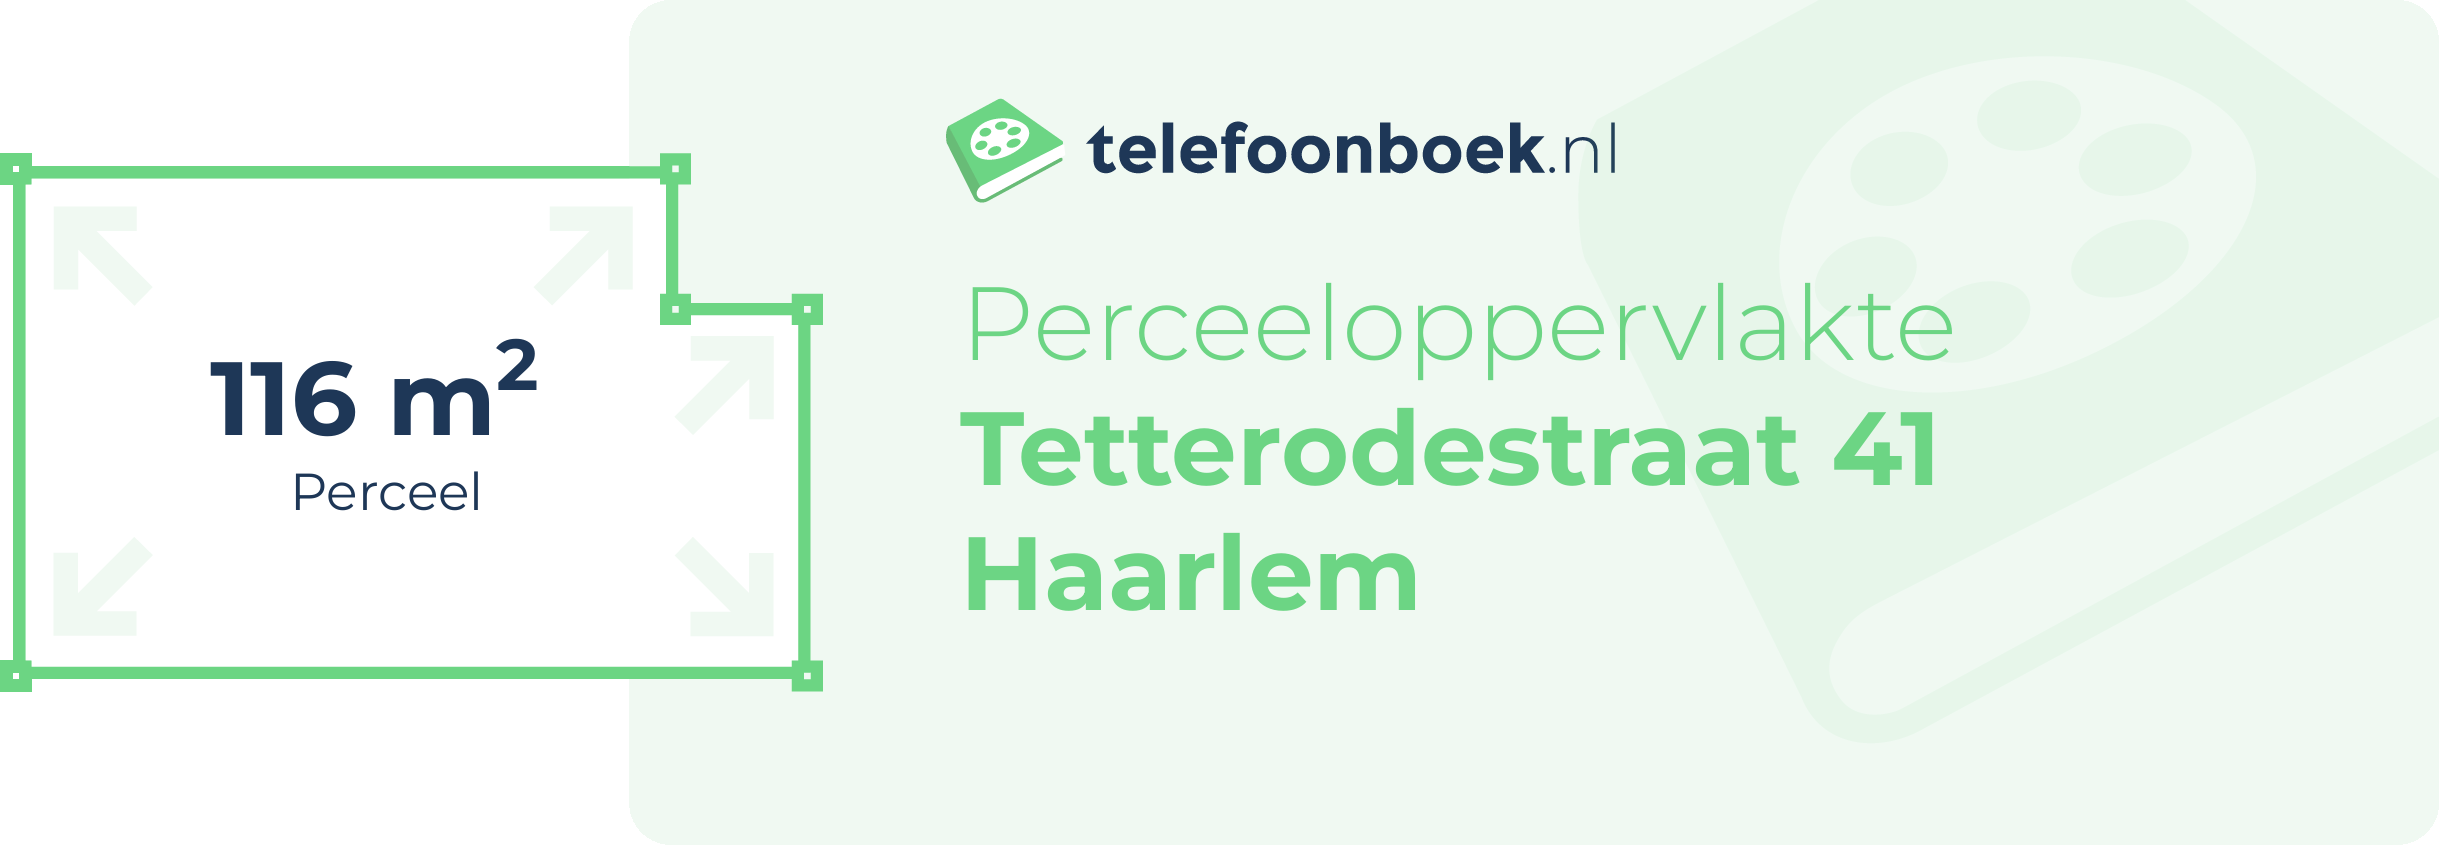 Perceeloppervlakte Tetterodestraat 41 Haarlem